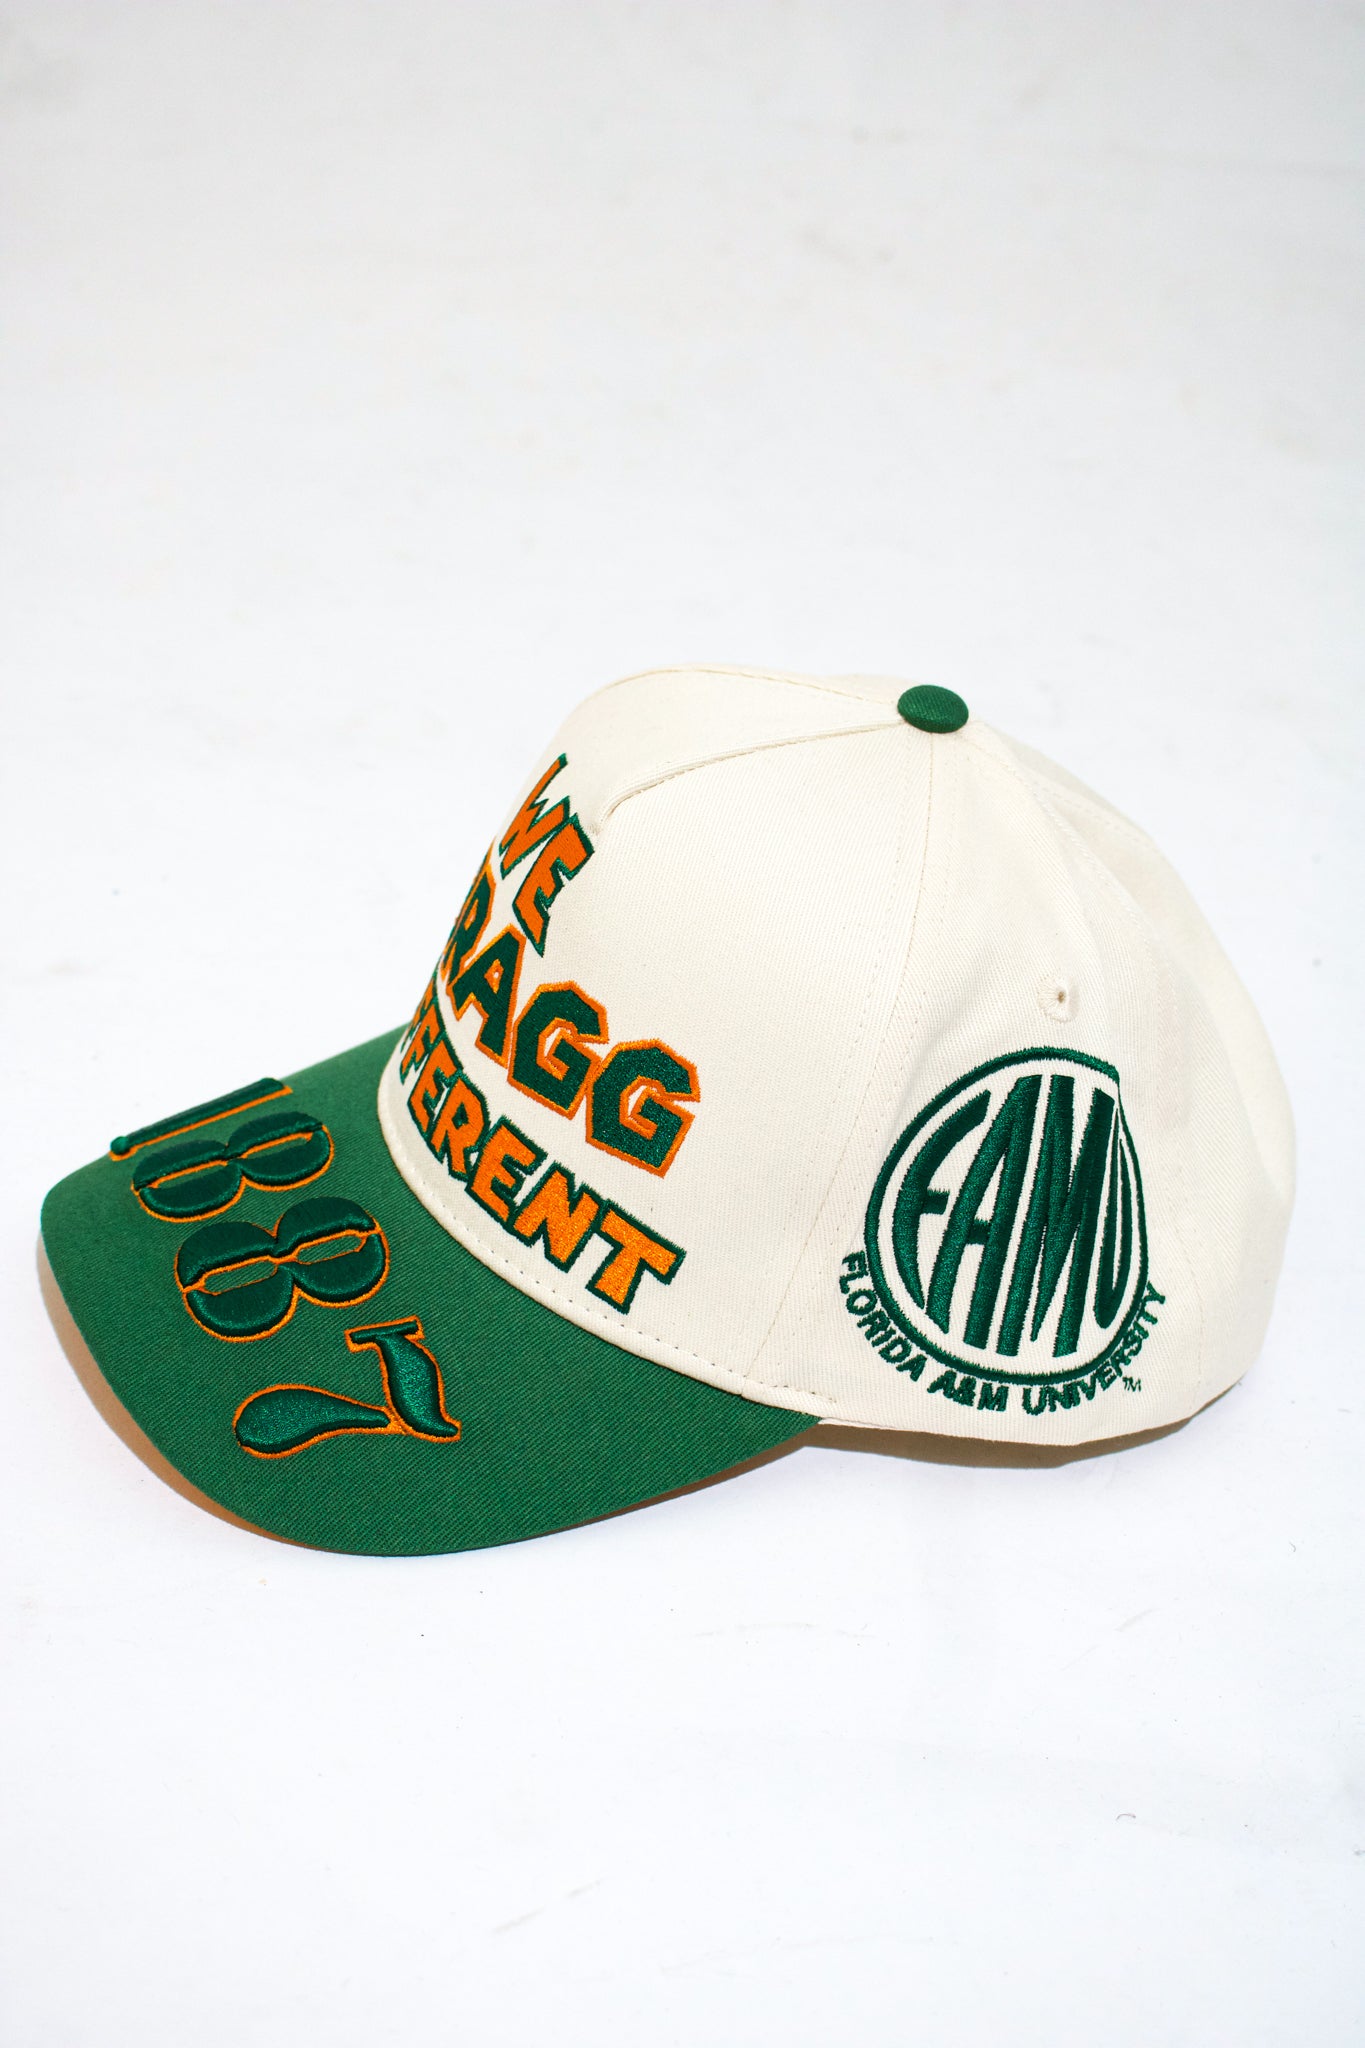 FAMU Hat - We Bragg Different